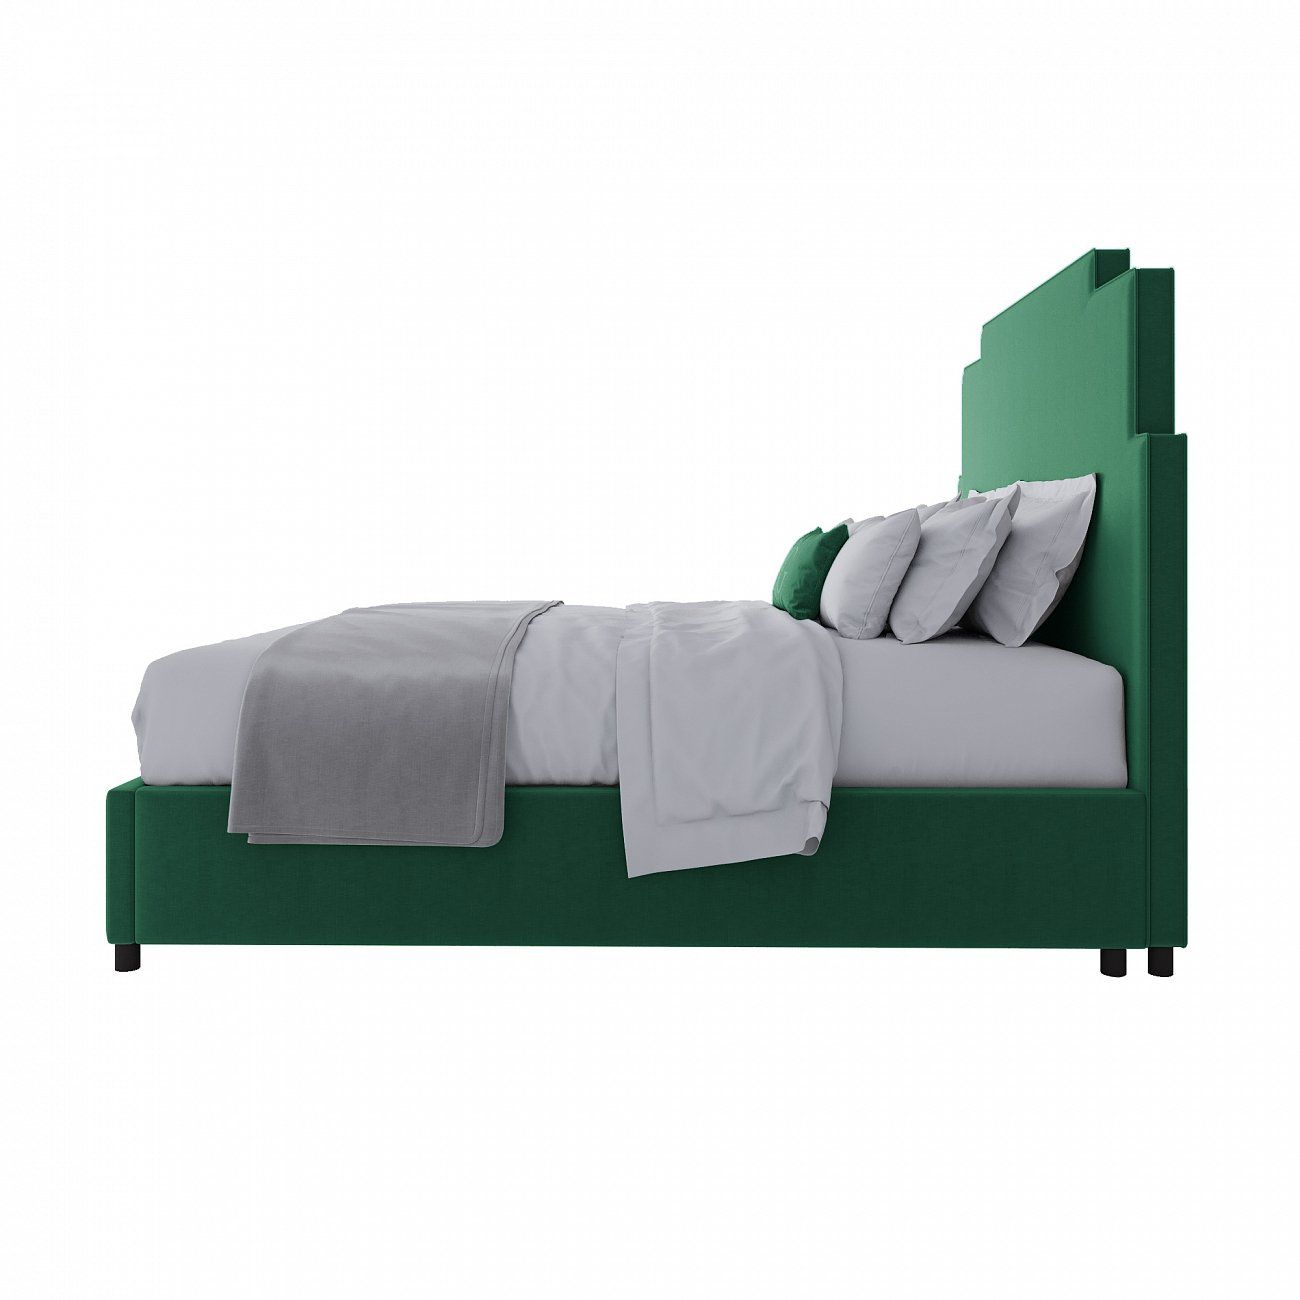 Кровать двуспальная 180х200 зеленая Paxton Emerald Velvet